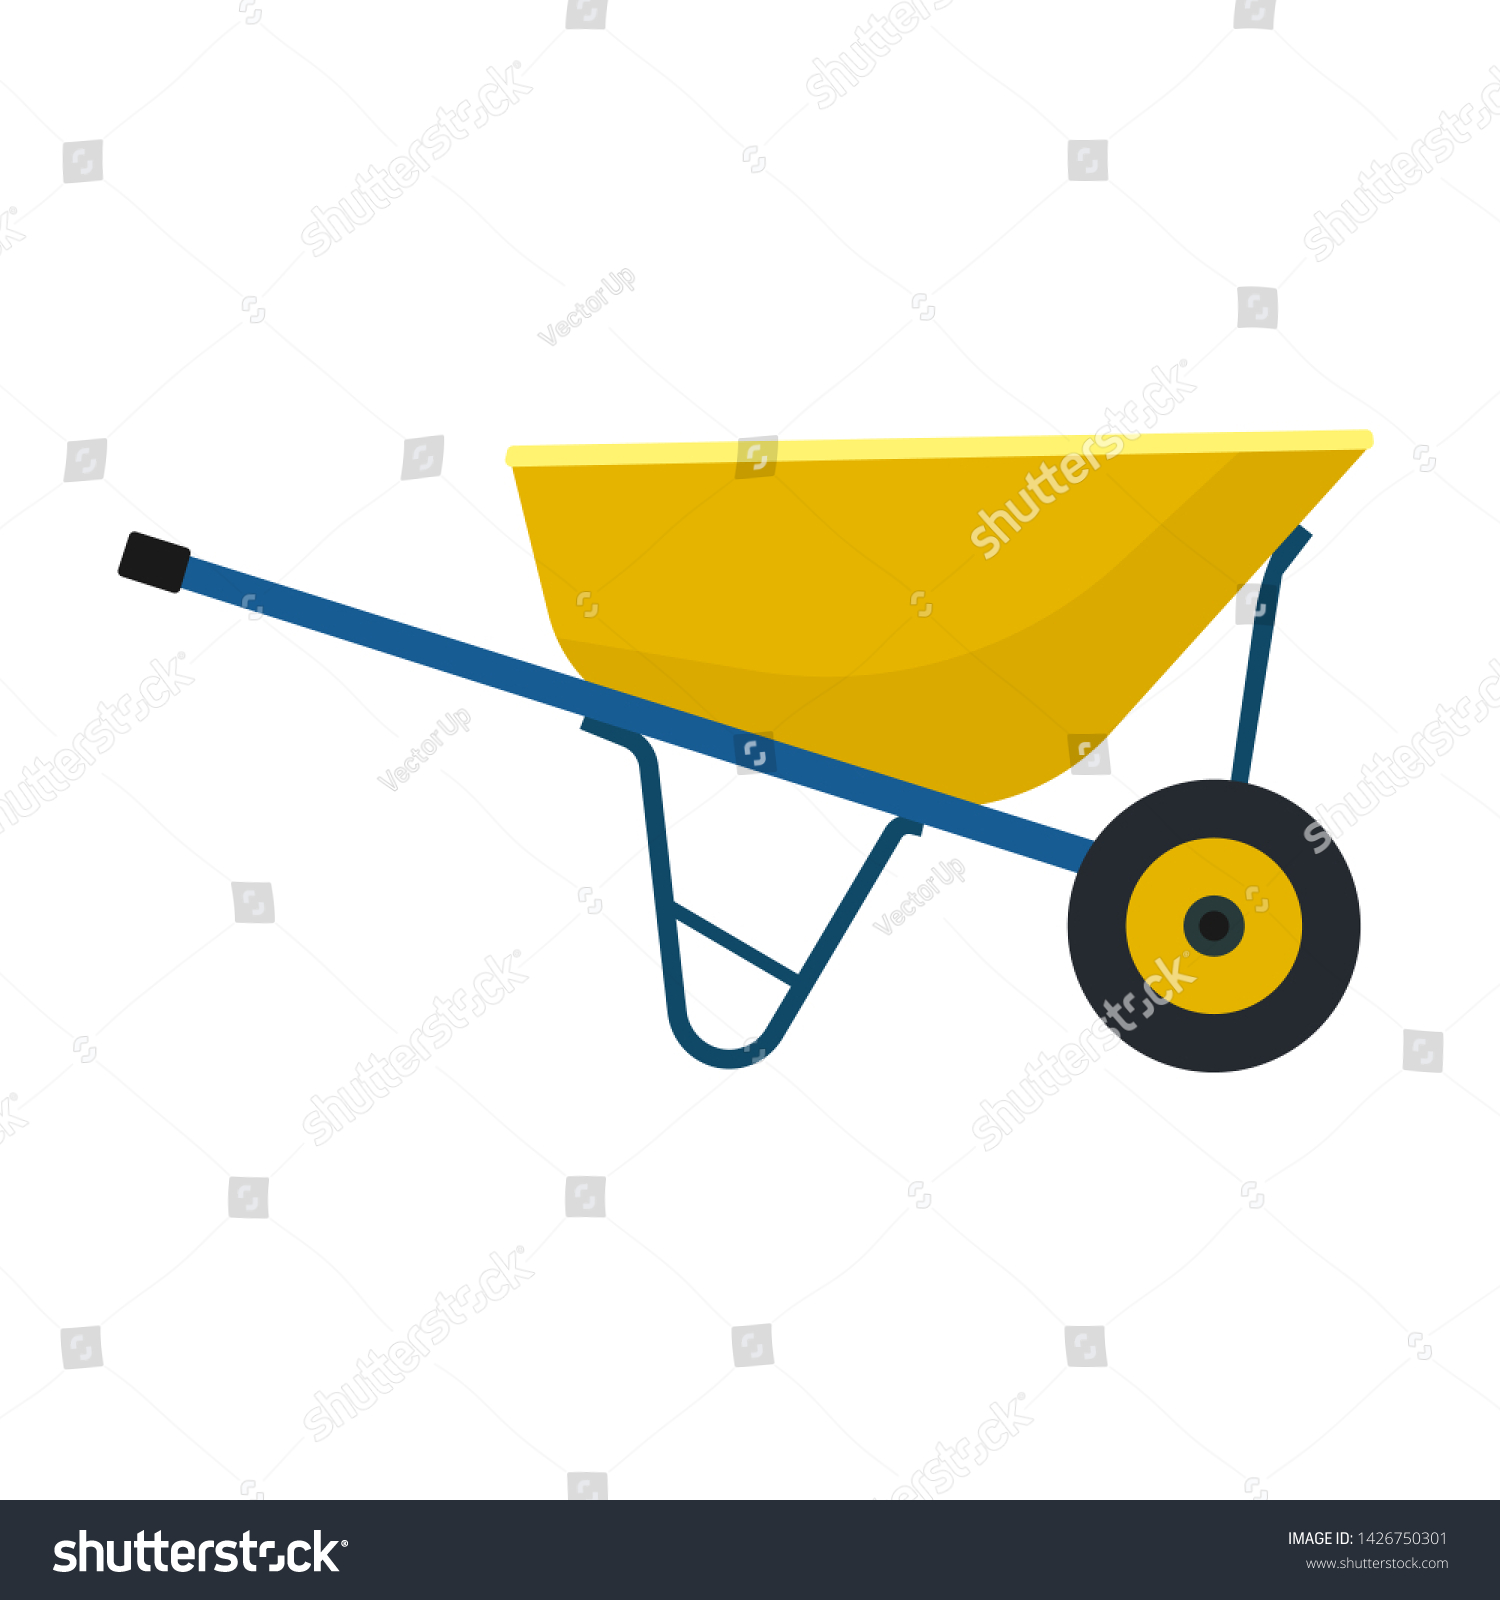 Wheelbarrow yellow garden vector tool equipment side view. Agriculture cart wheel cartoon farm. Flat lawn ground supplies  #1426750301